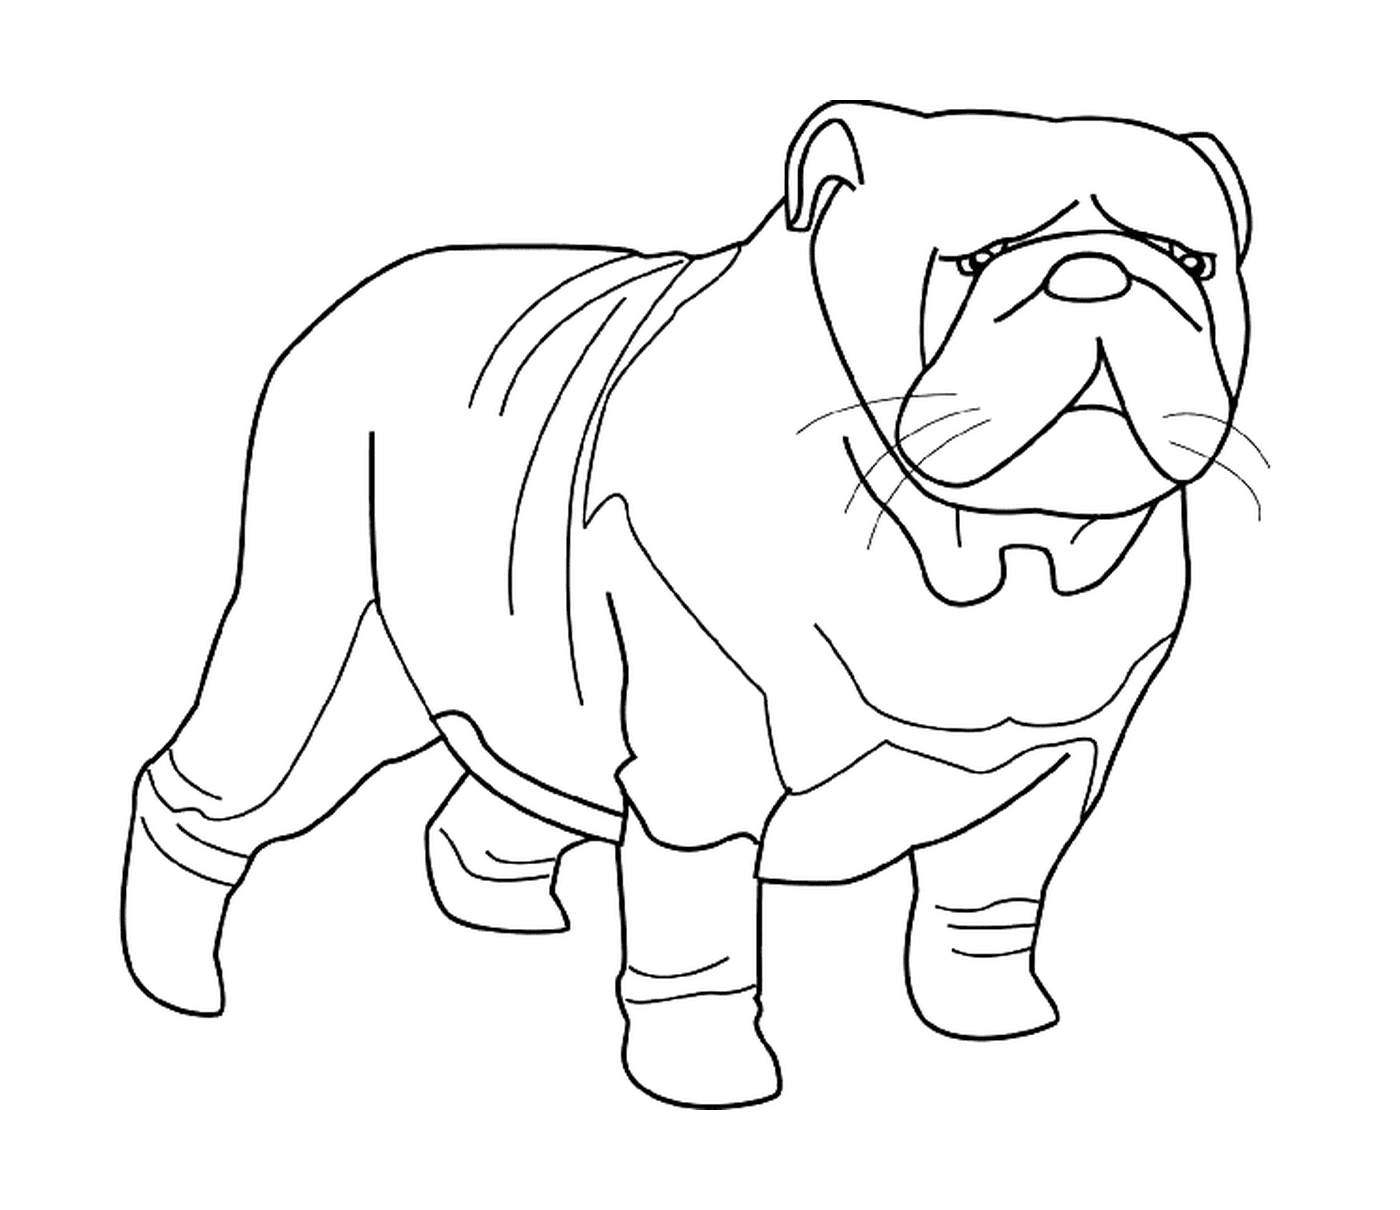  A bulldog vestindo um suéter 